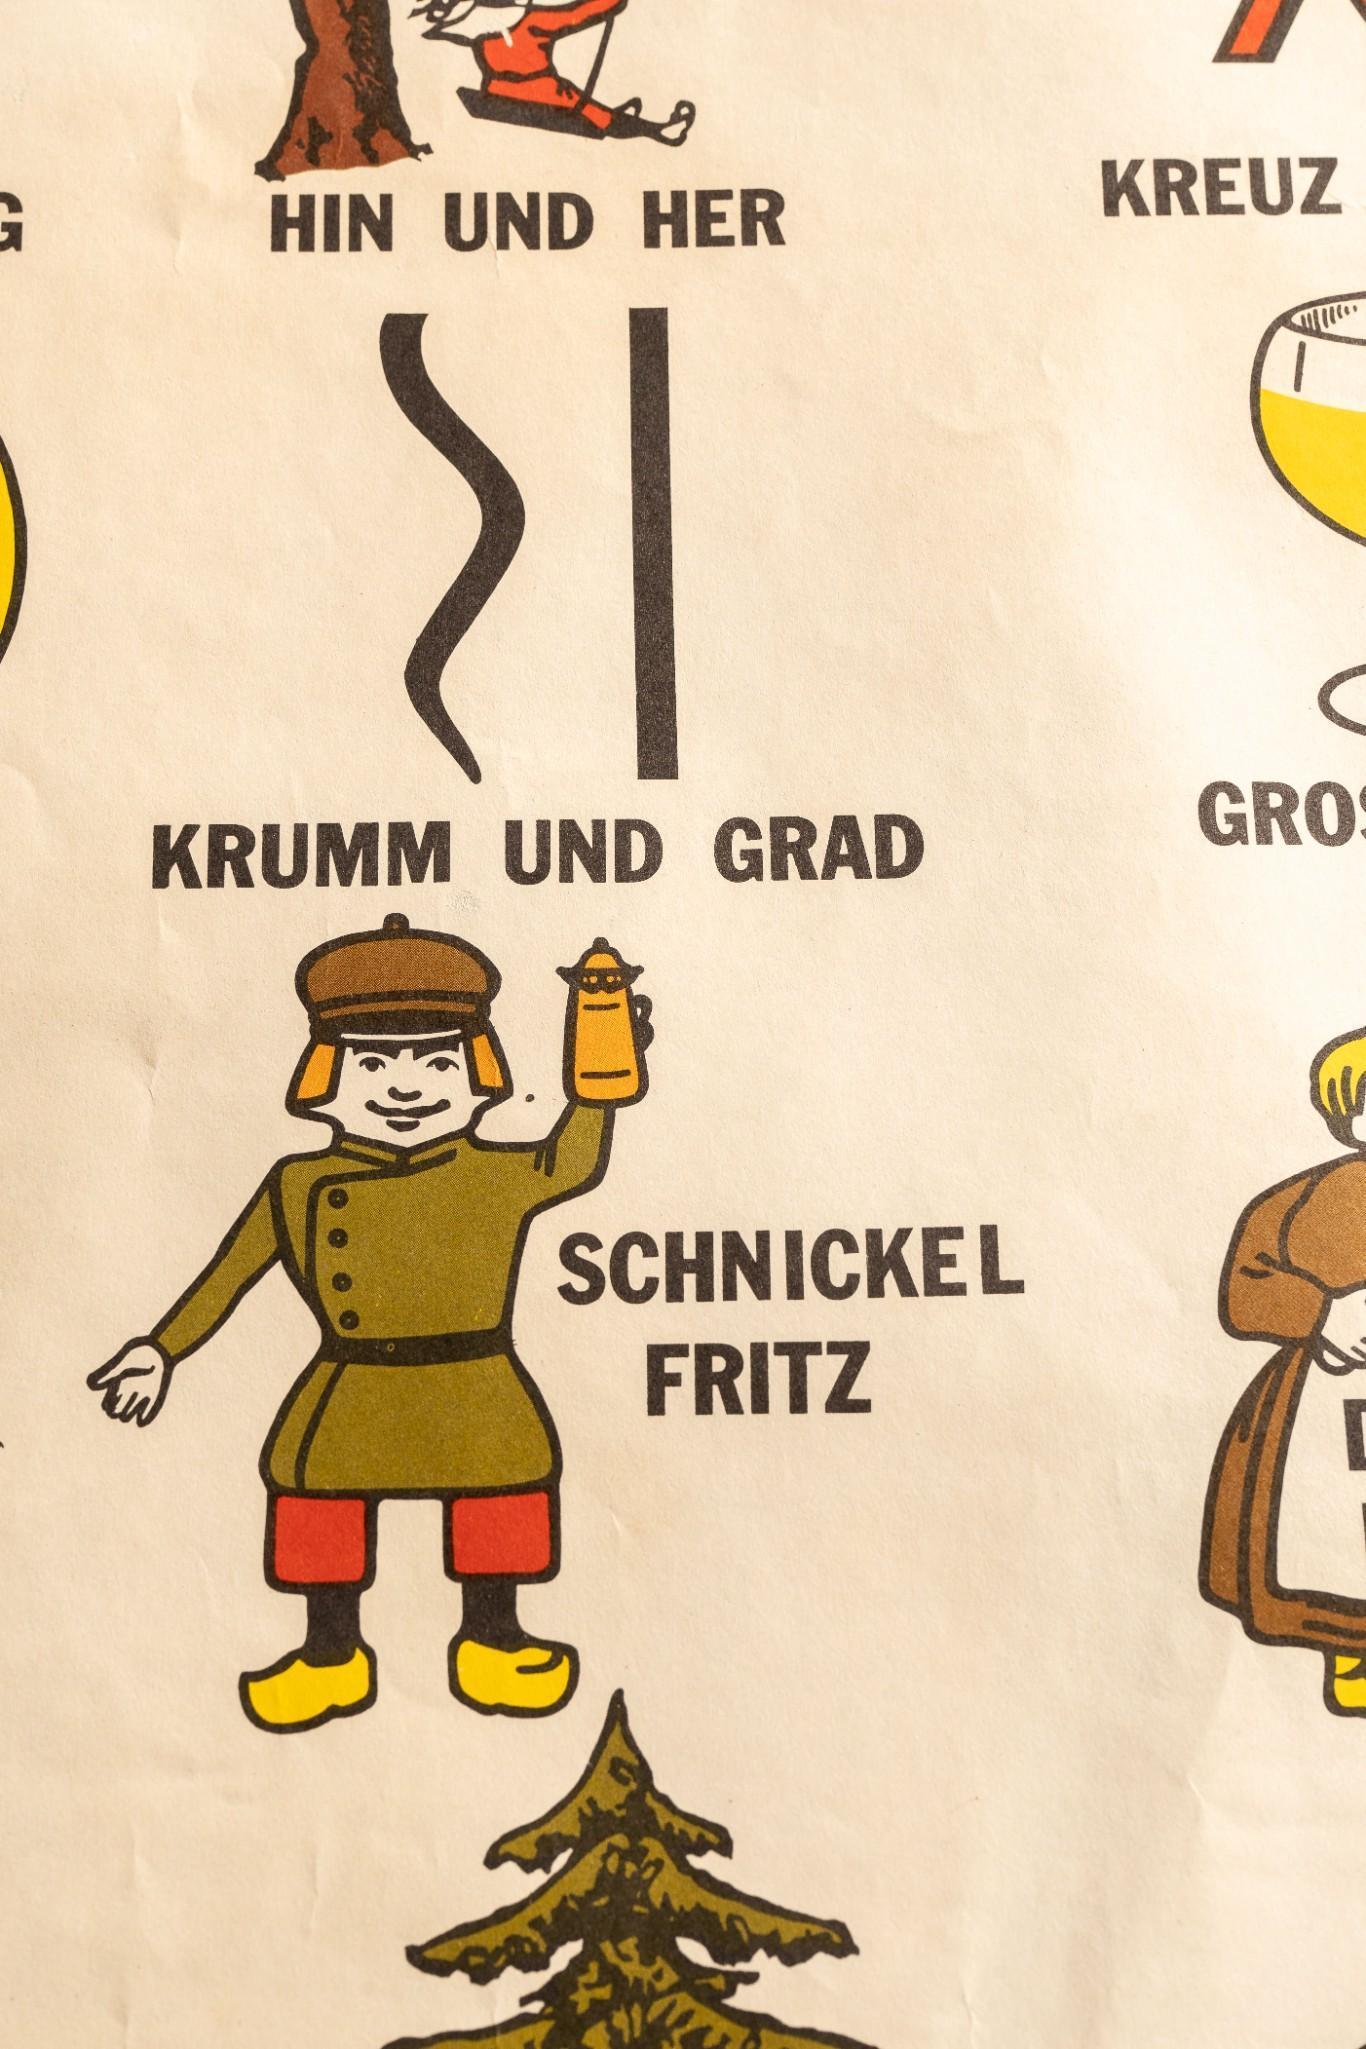 Vintage Lithographic German Restaurant Advertising Poster